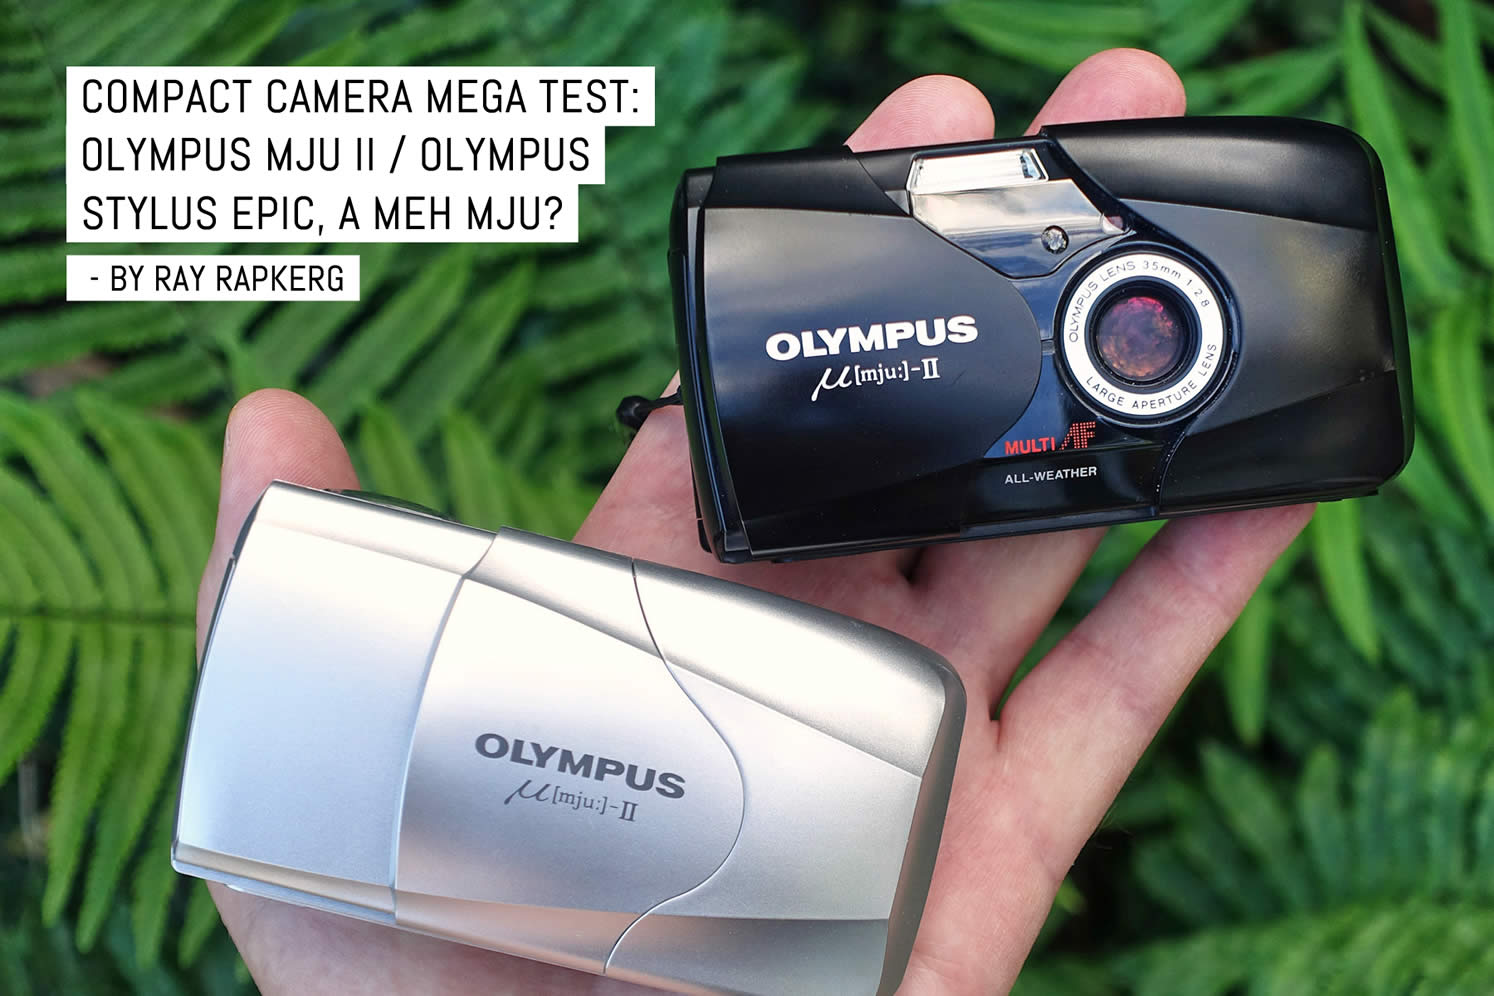 Compact camera mega test: Olympus MJU II / Olympus Stylus Epic, a 